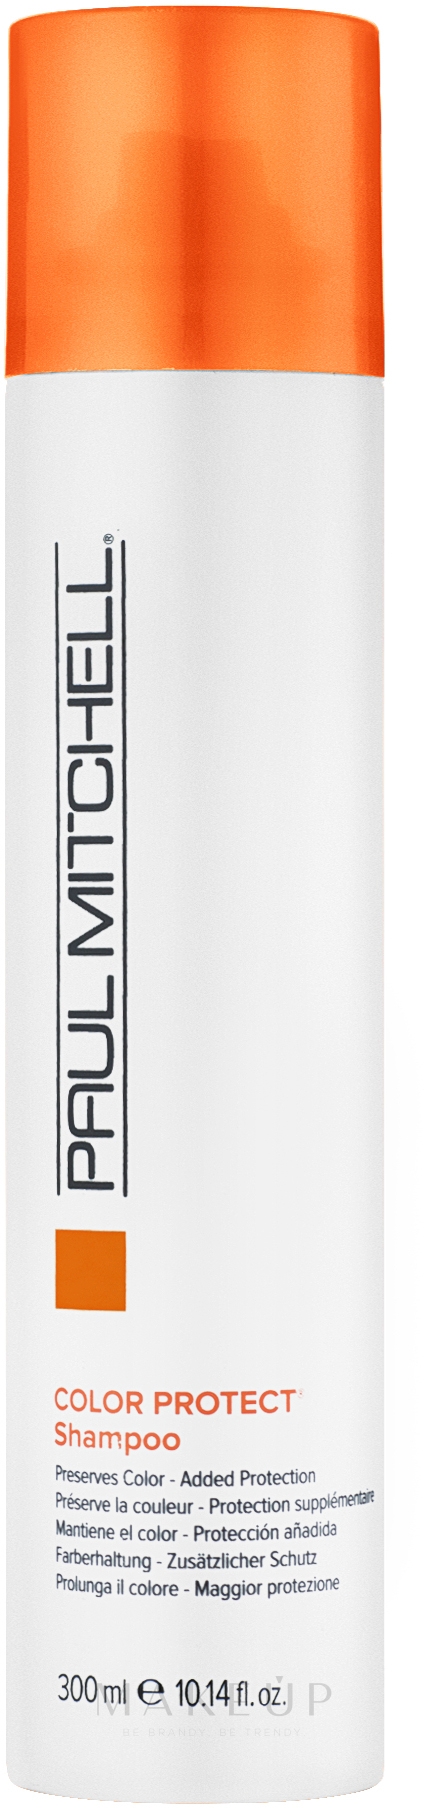 Farbschutz-Shampoo für coloriertes Haar - Paul Mitchell ColorCare Color Protect Daily Shampoo — Foto 300 ml